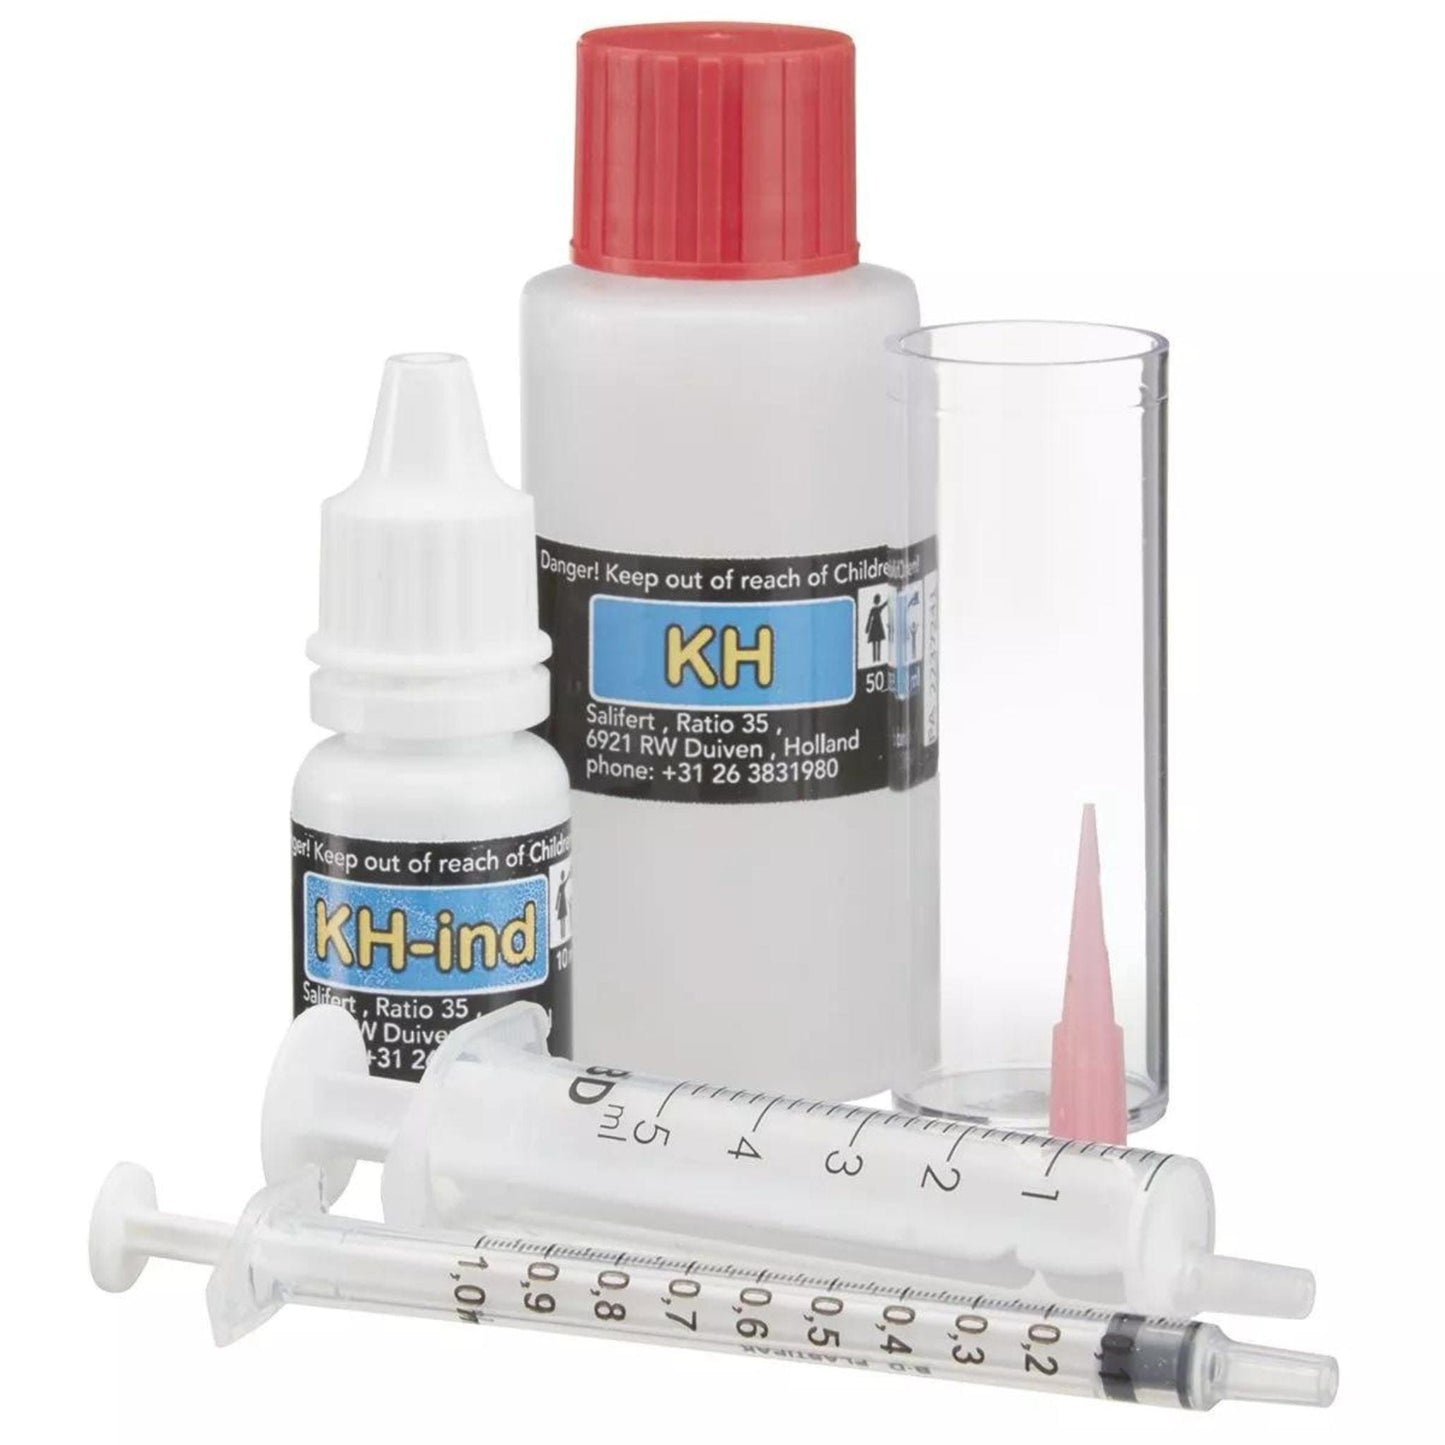 kH/Alkalinity Test Kit - Salifert